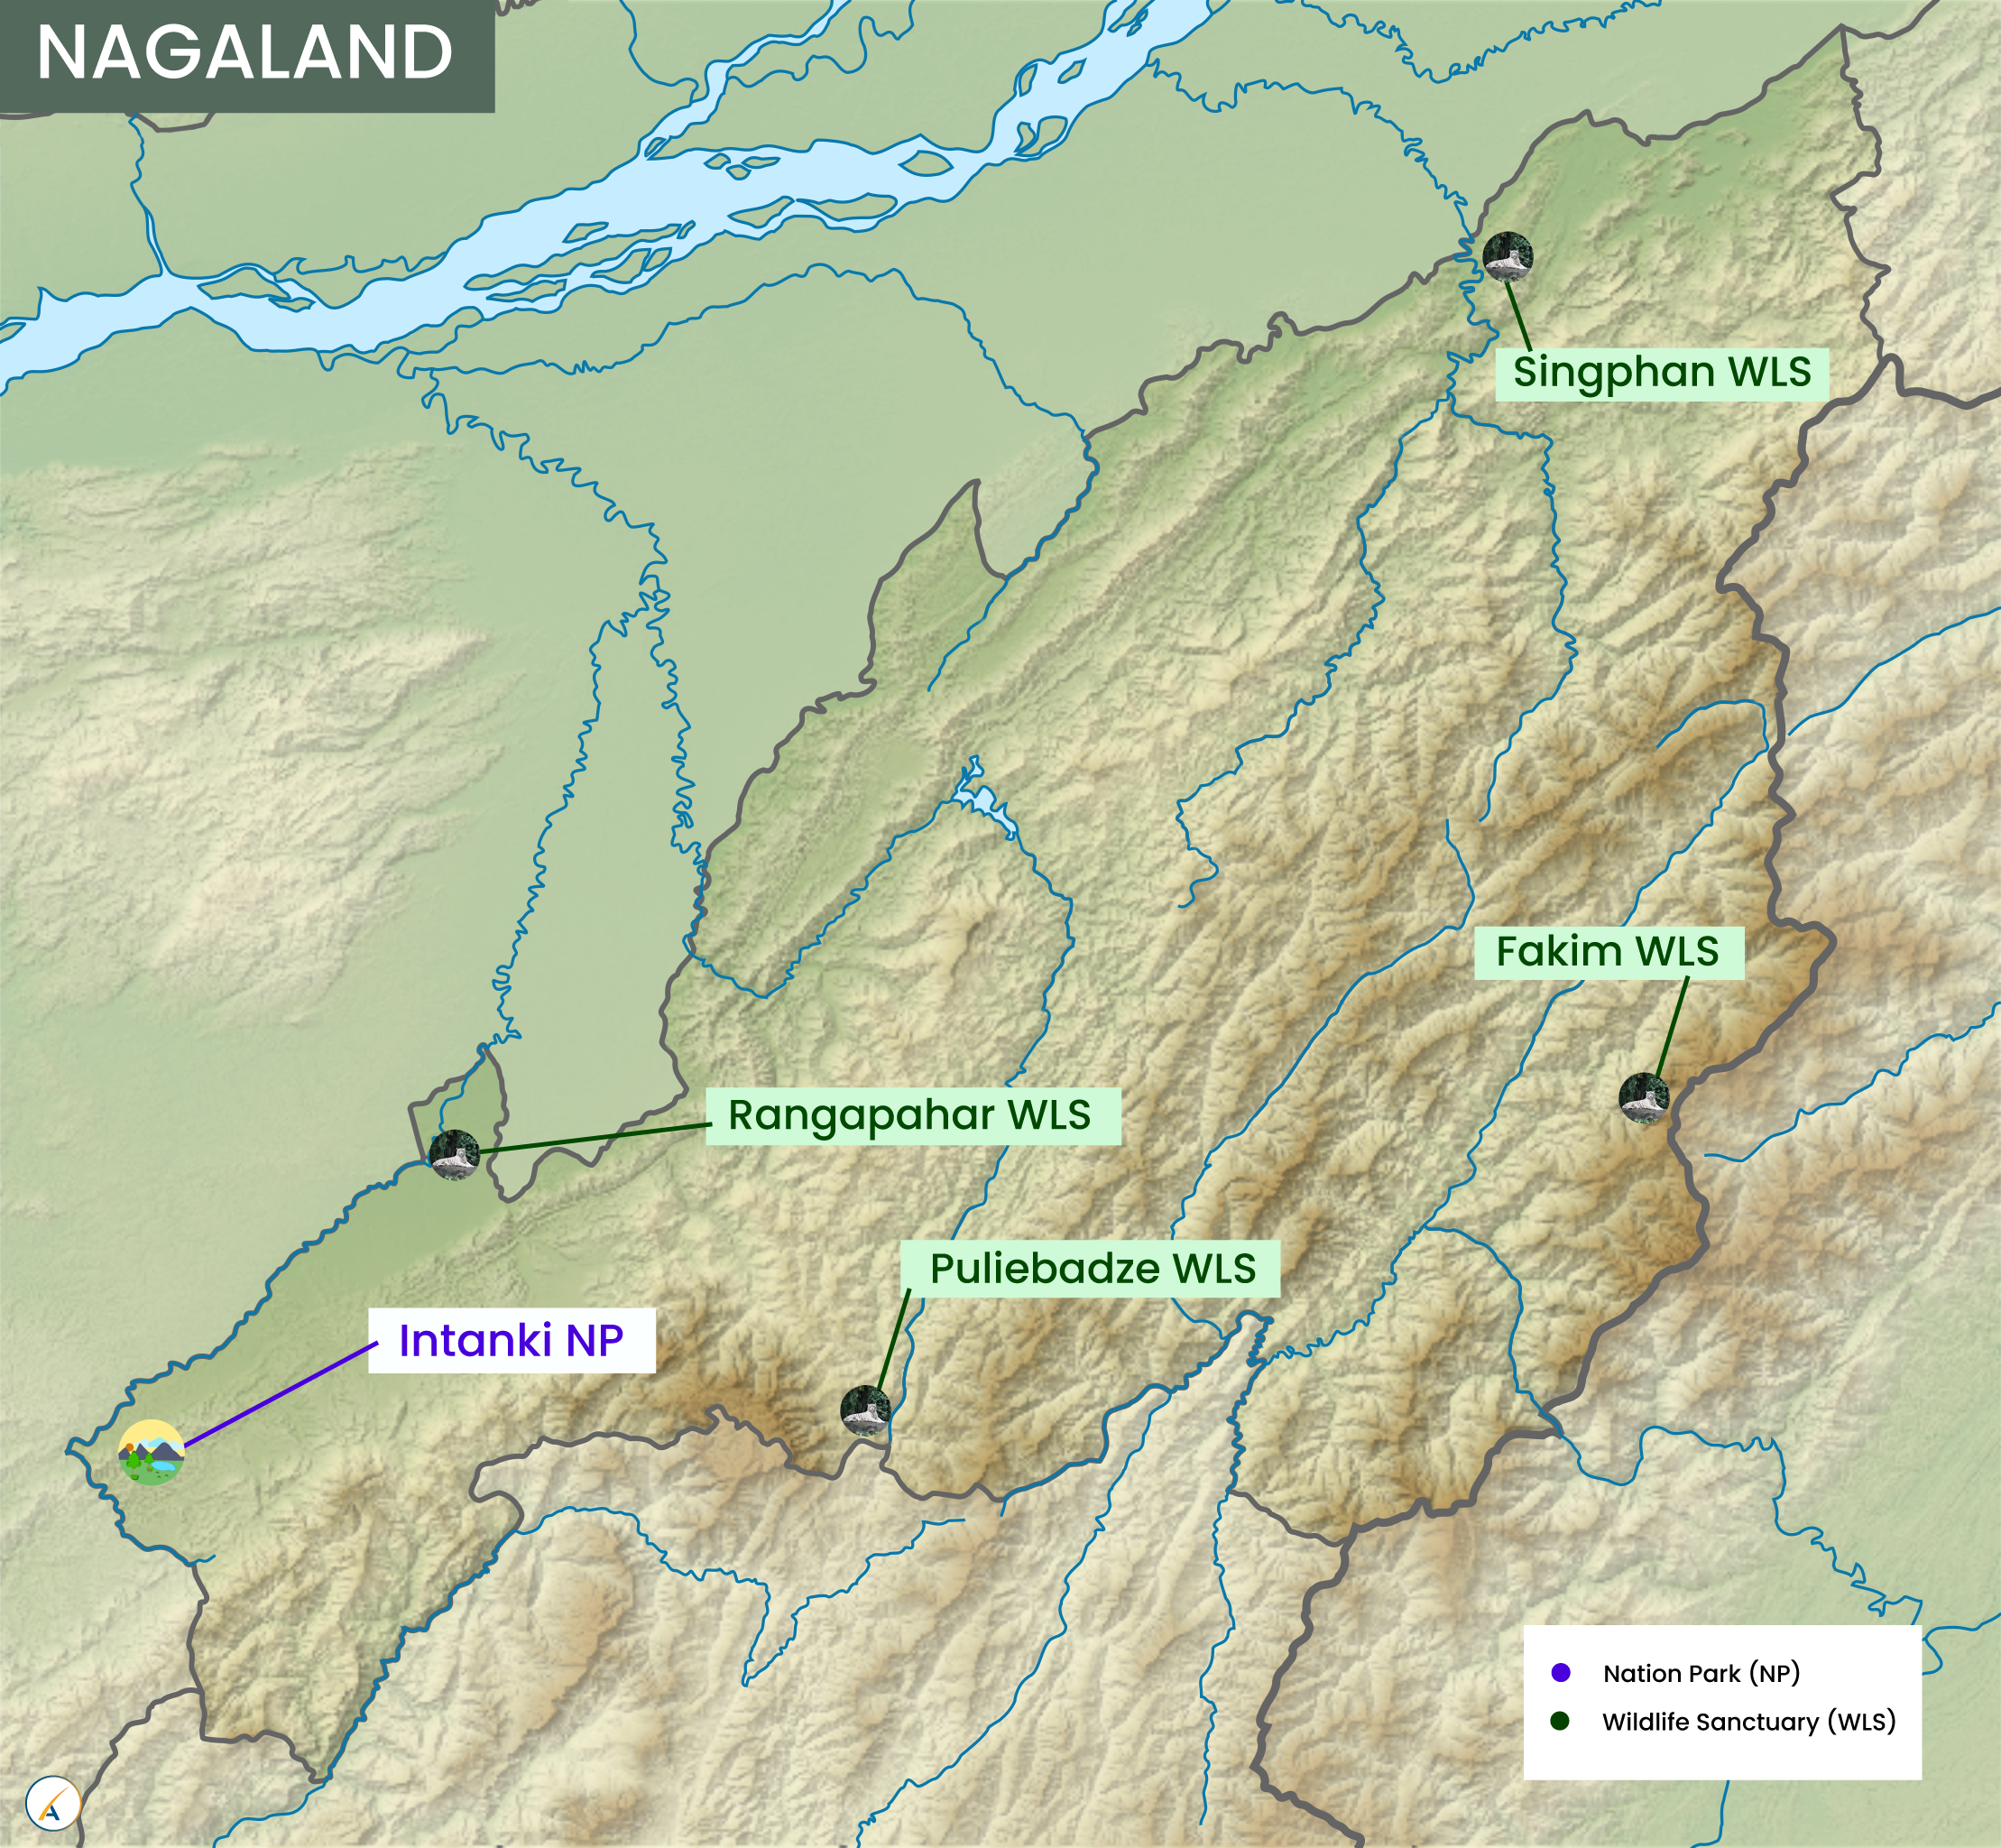 Nagaland National Parks and Wildlife Sanctuaries Map